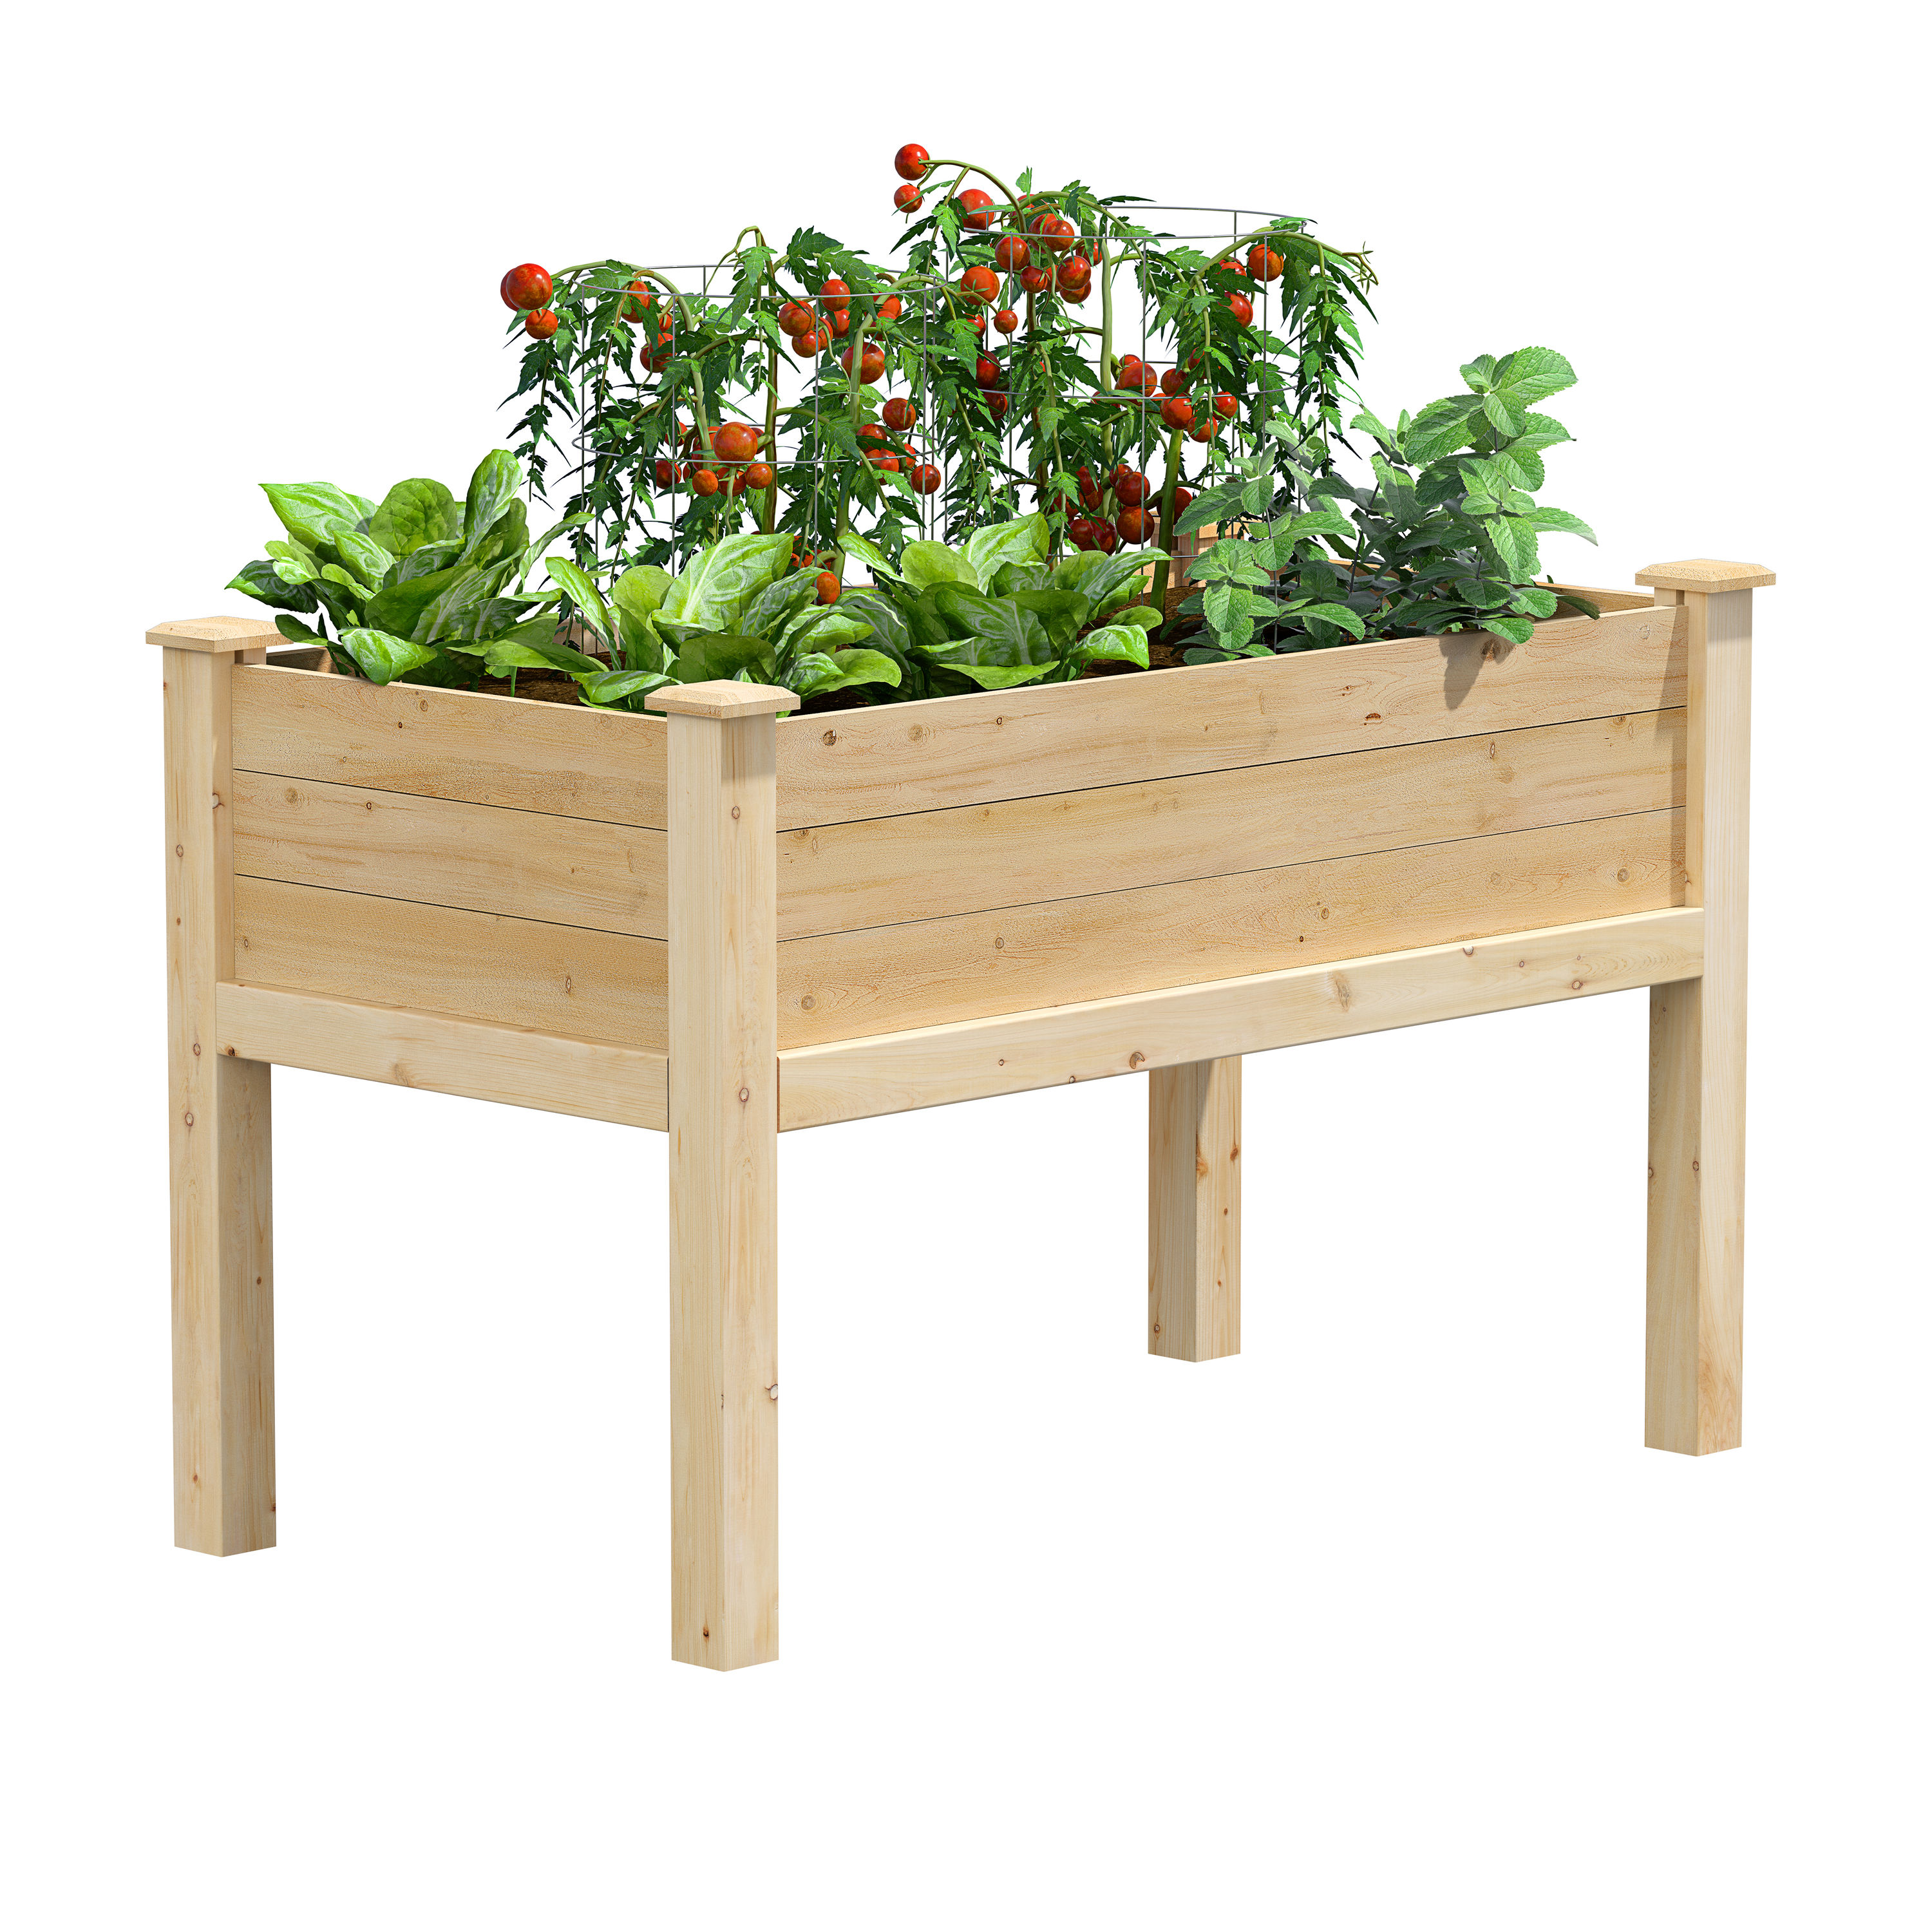 Cedar Corner Raised Elevated Garden Planter Bed Box Kit Vegetable Flower Outdoor 